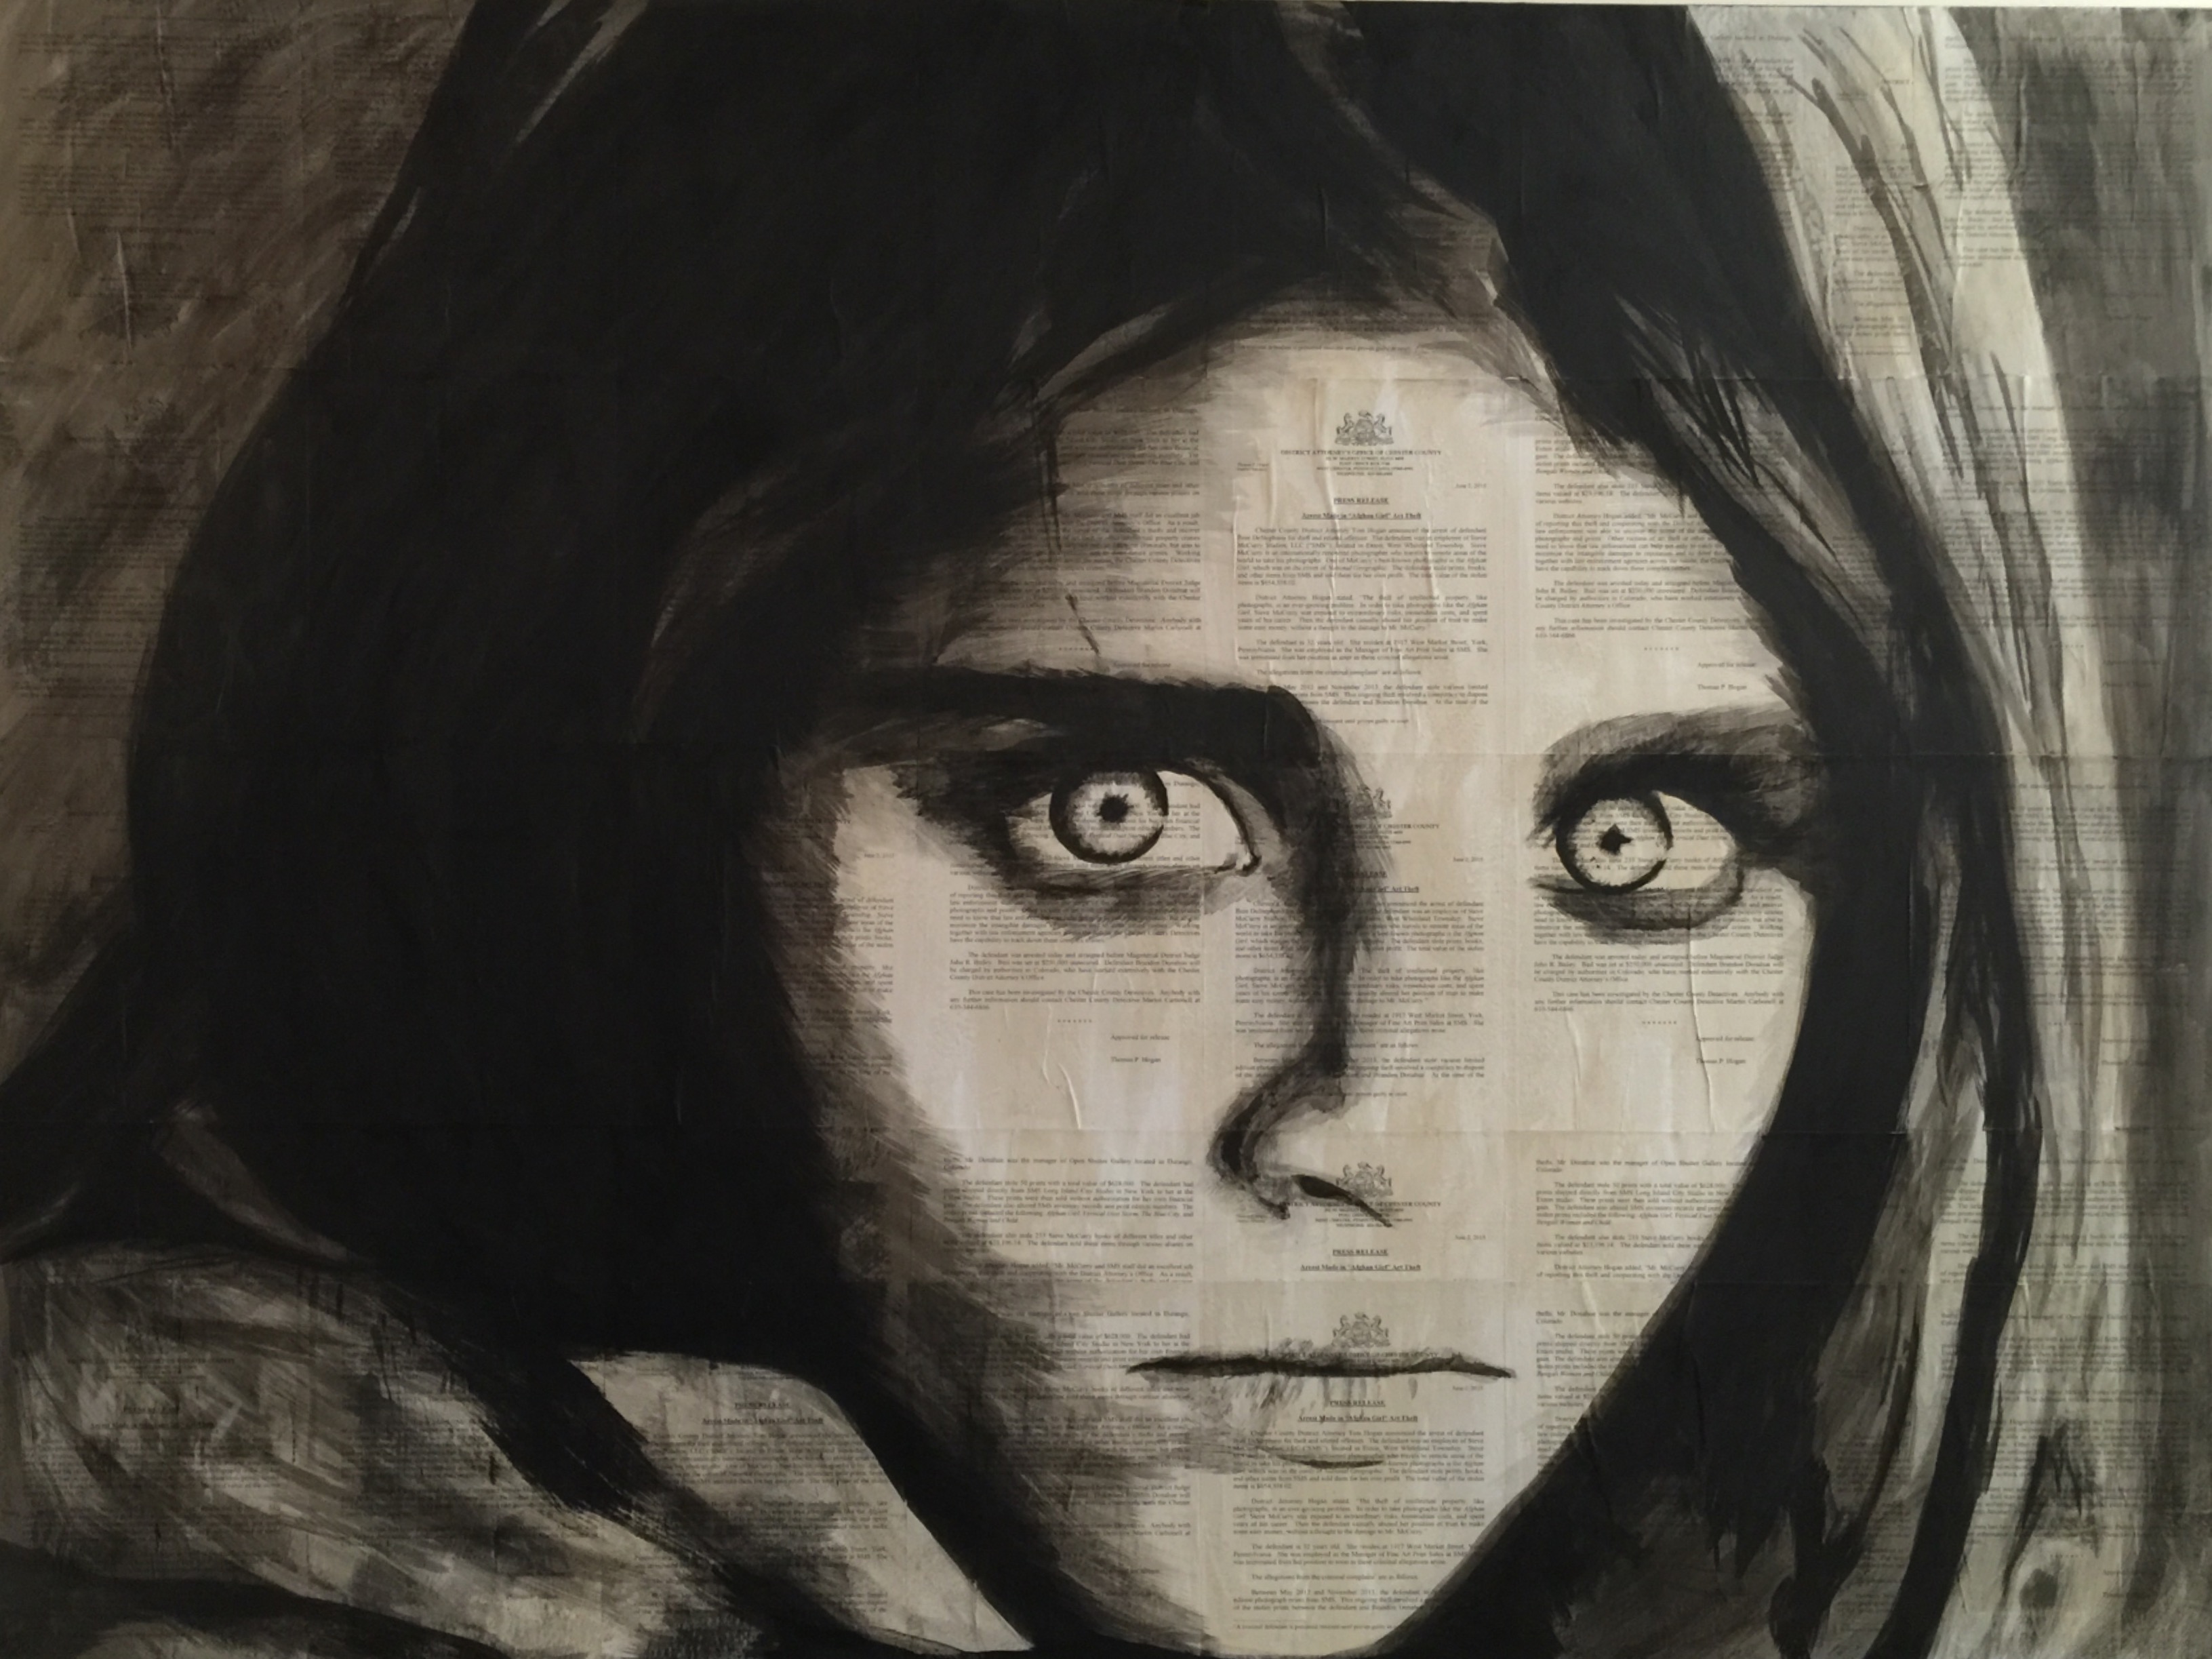 Exhibit 7: The Afghan Girl